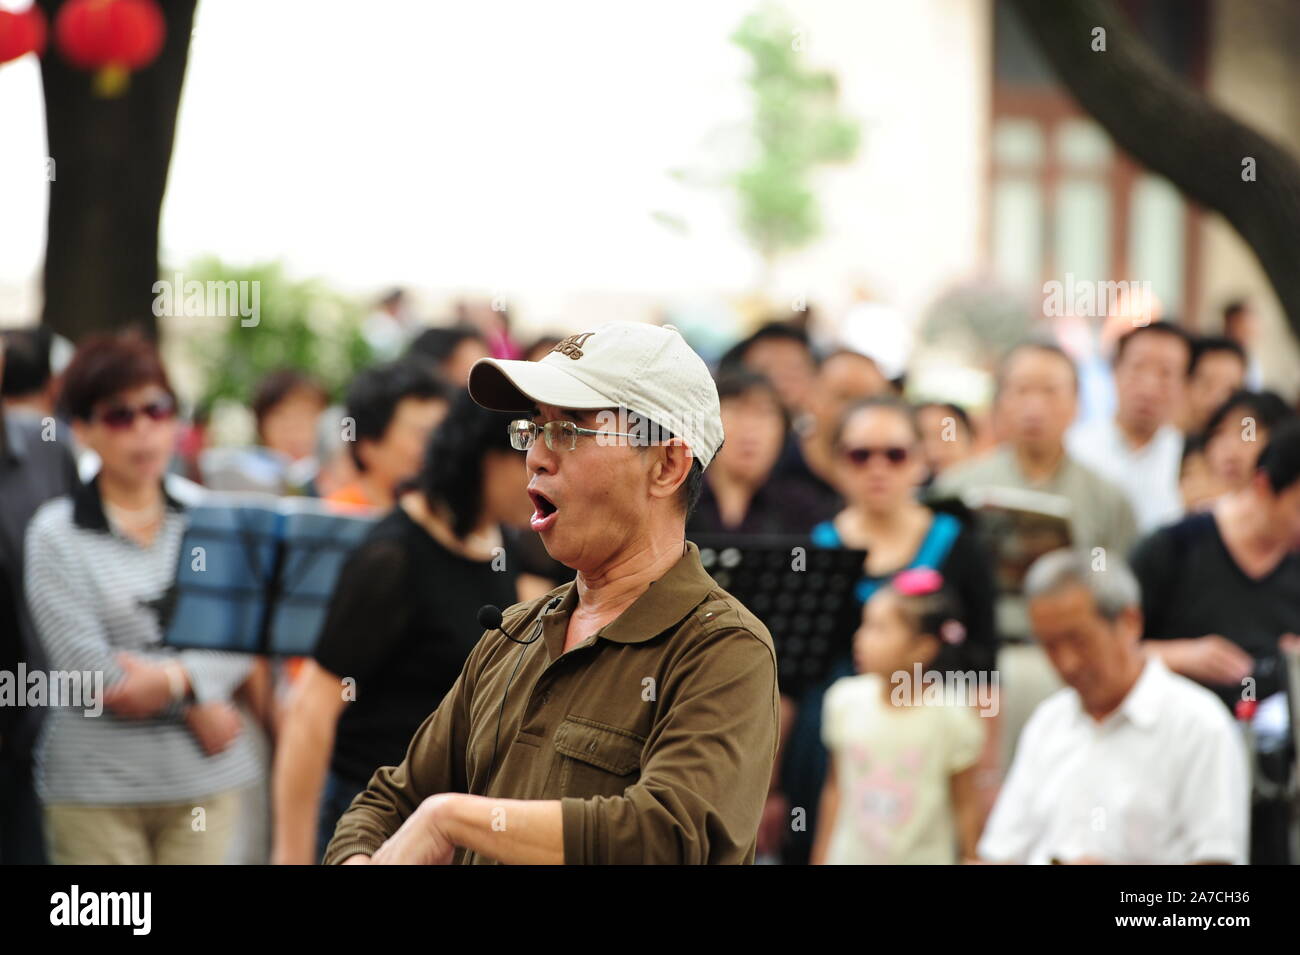 China Festival Crowds Stock Photo